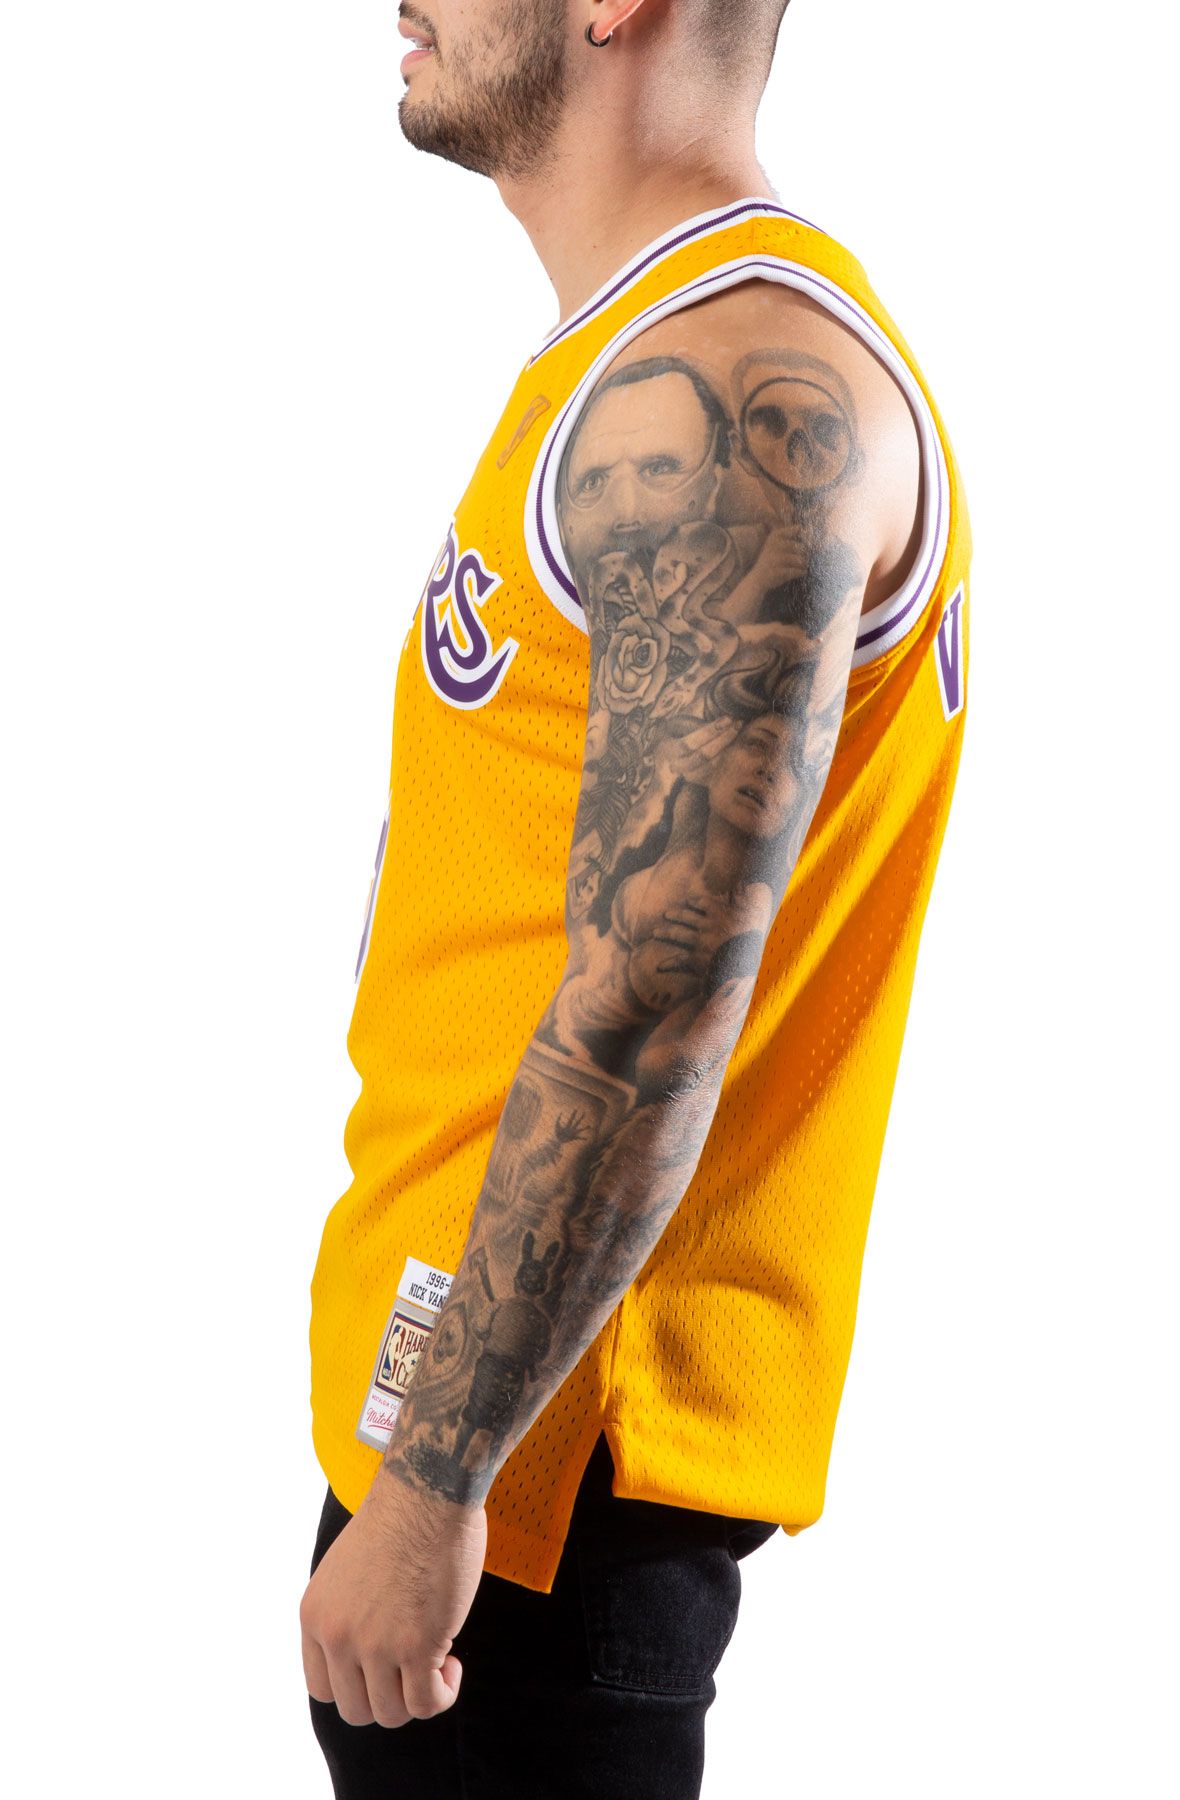 Nick Van Exel 9 Los Angeles Lakers Champion NBA Jersey Sz 